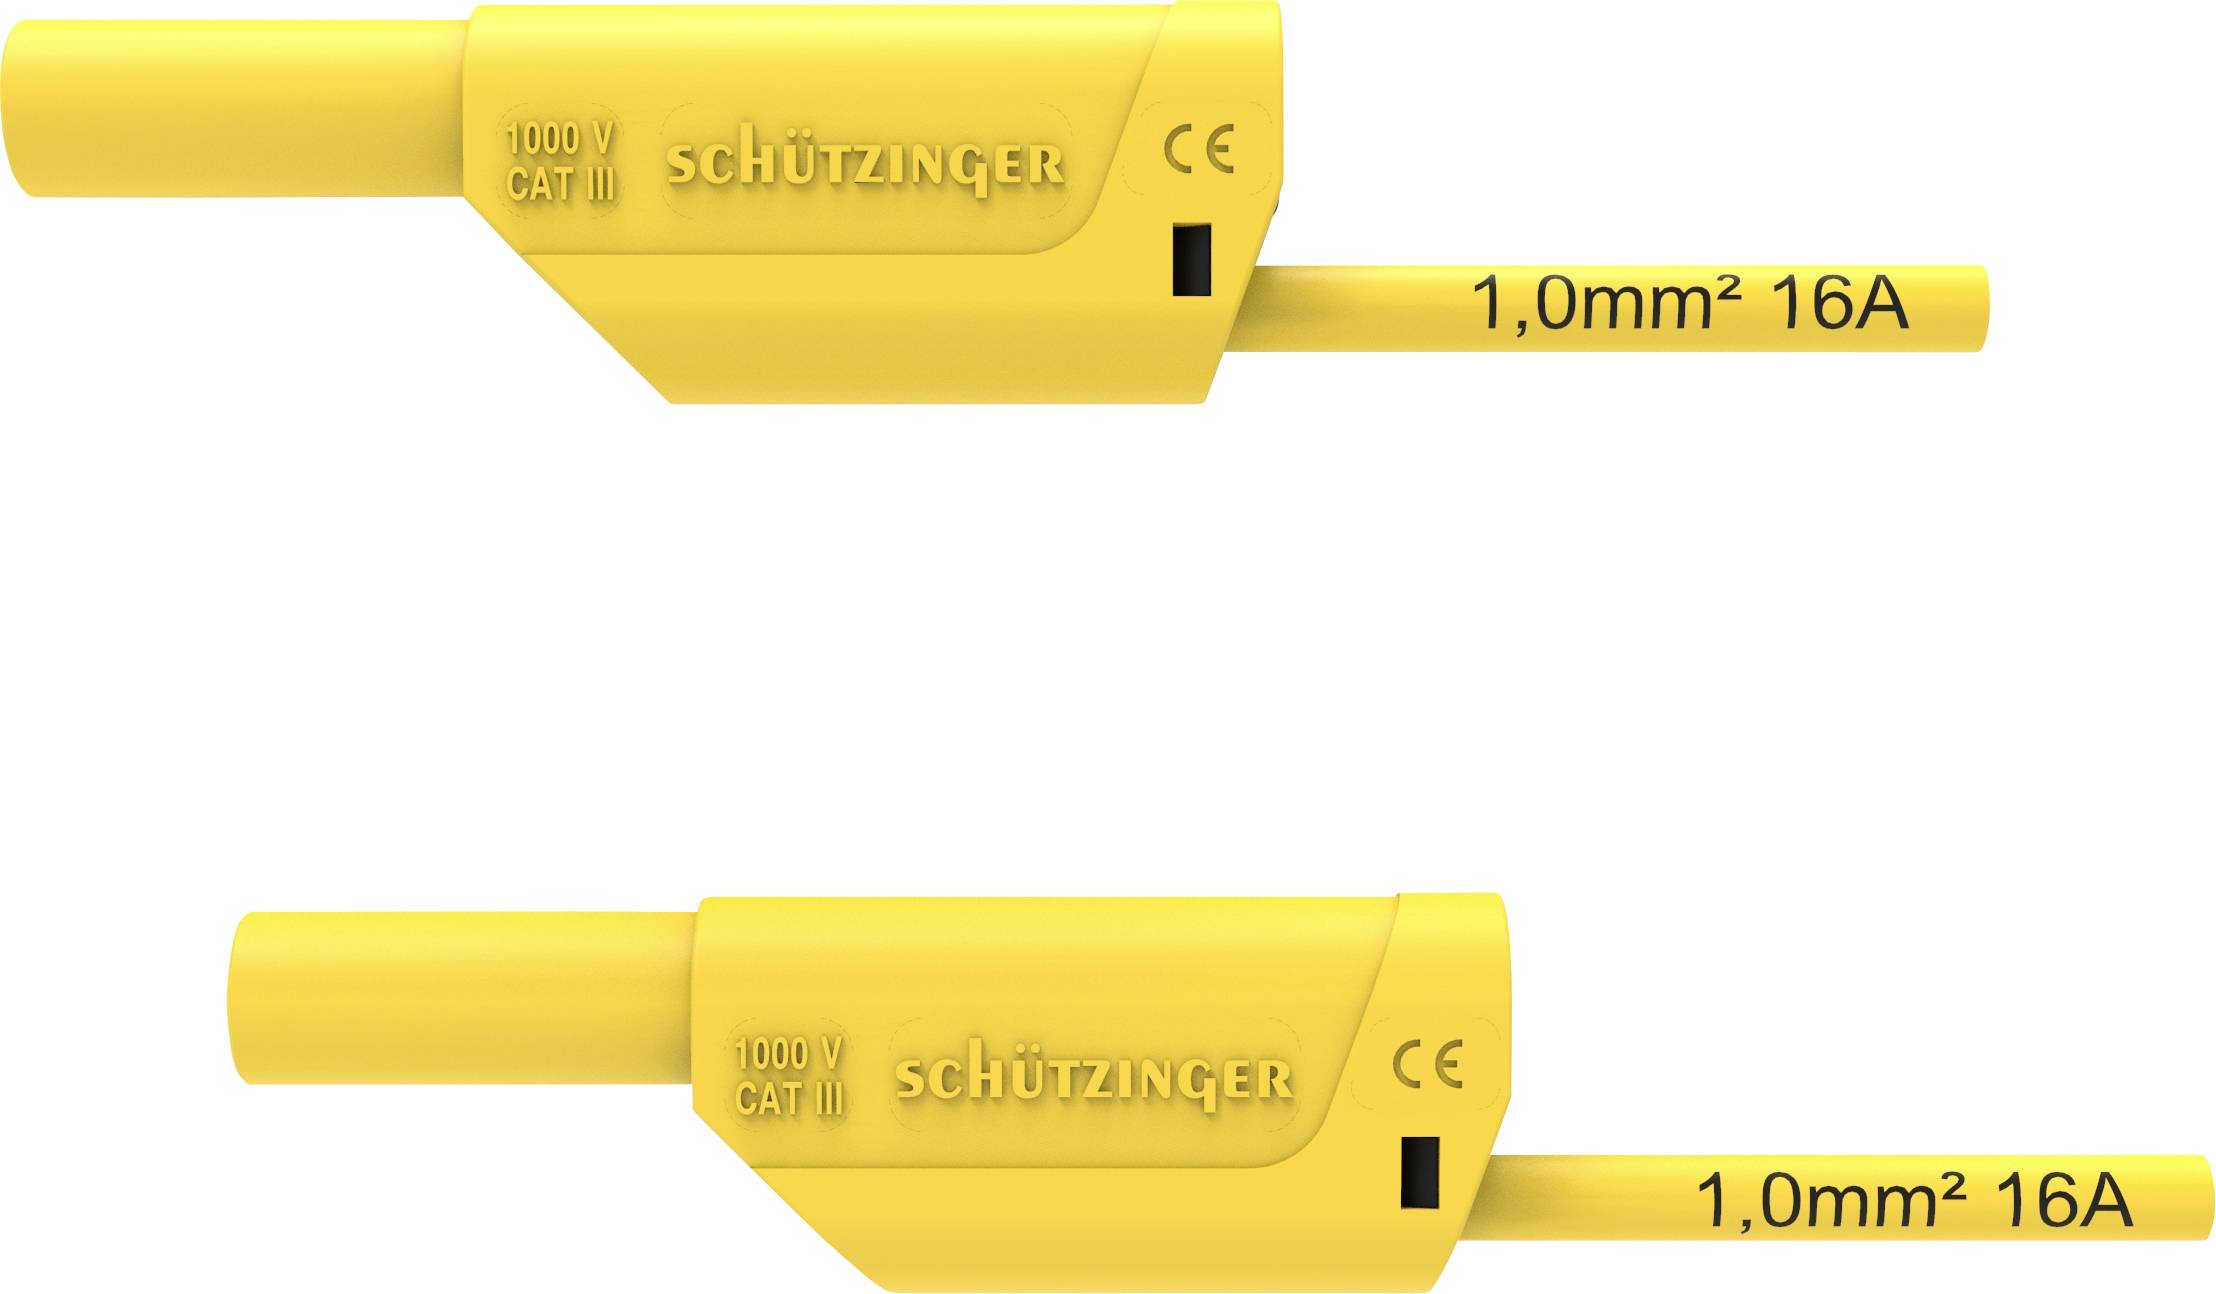 SCHÜTZINGER VSFK 8700 / 1 / 50 / GE Sicherheits-Messleitung [4 mm-Stecker - 4 mm-Stecker] 50.00